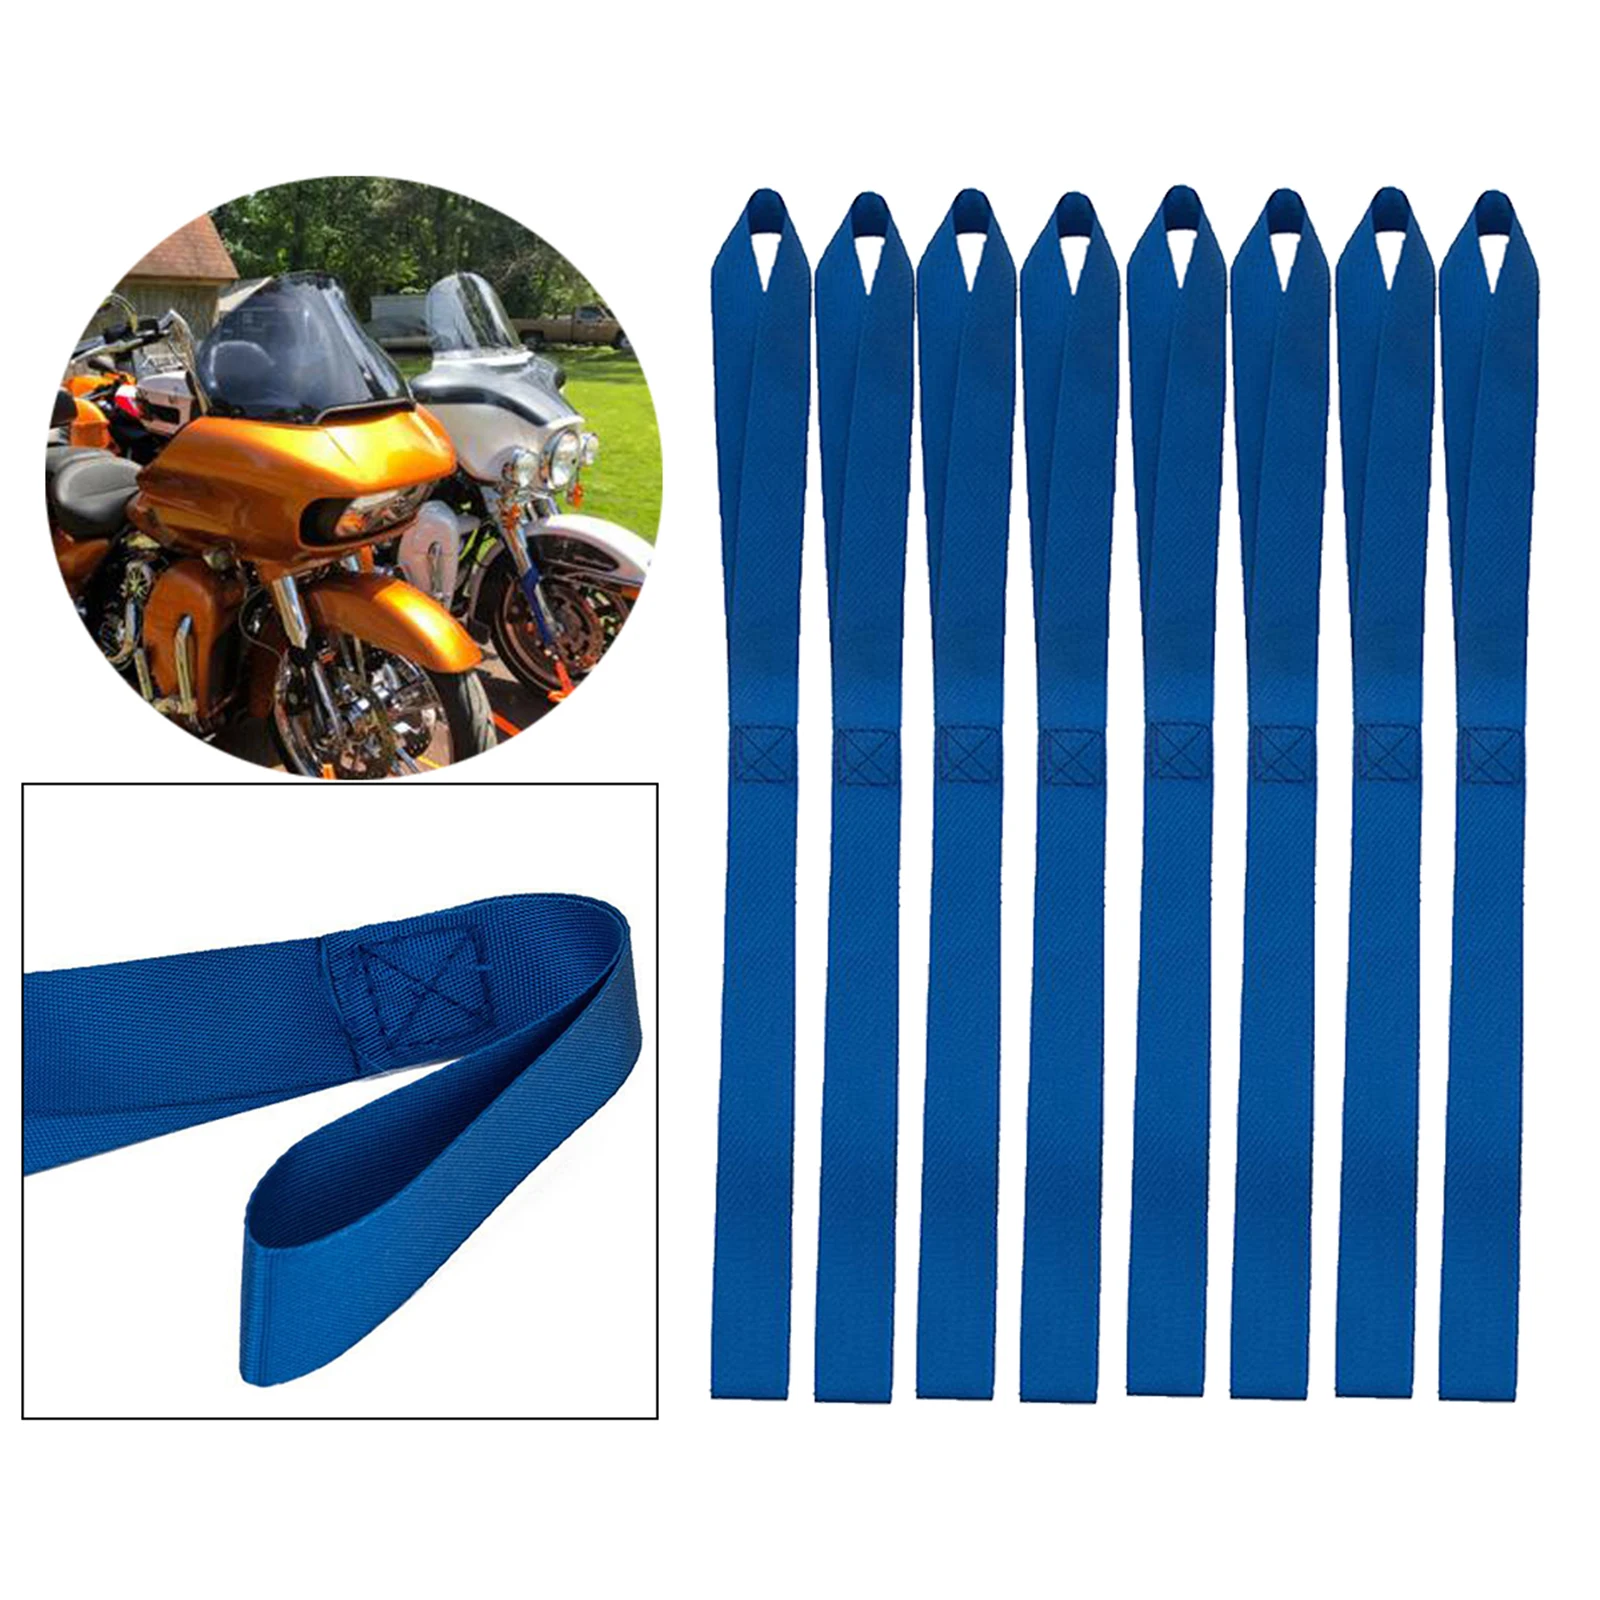 8x Soft Loops Tie Down Straps Blue for ATV, UTV, Snowmobile, Motorcycle & Dirt Bike